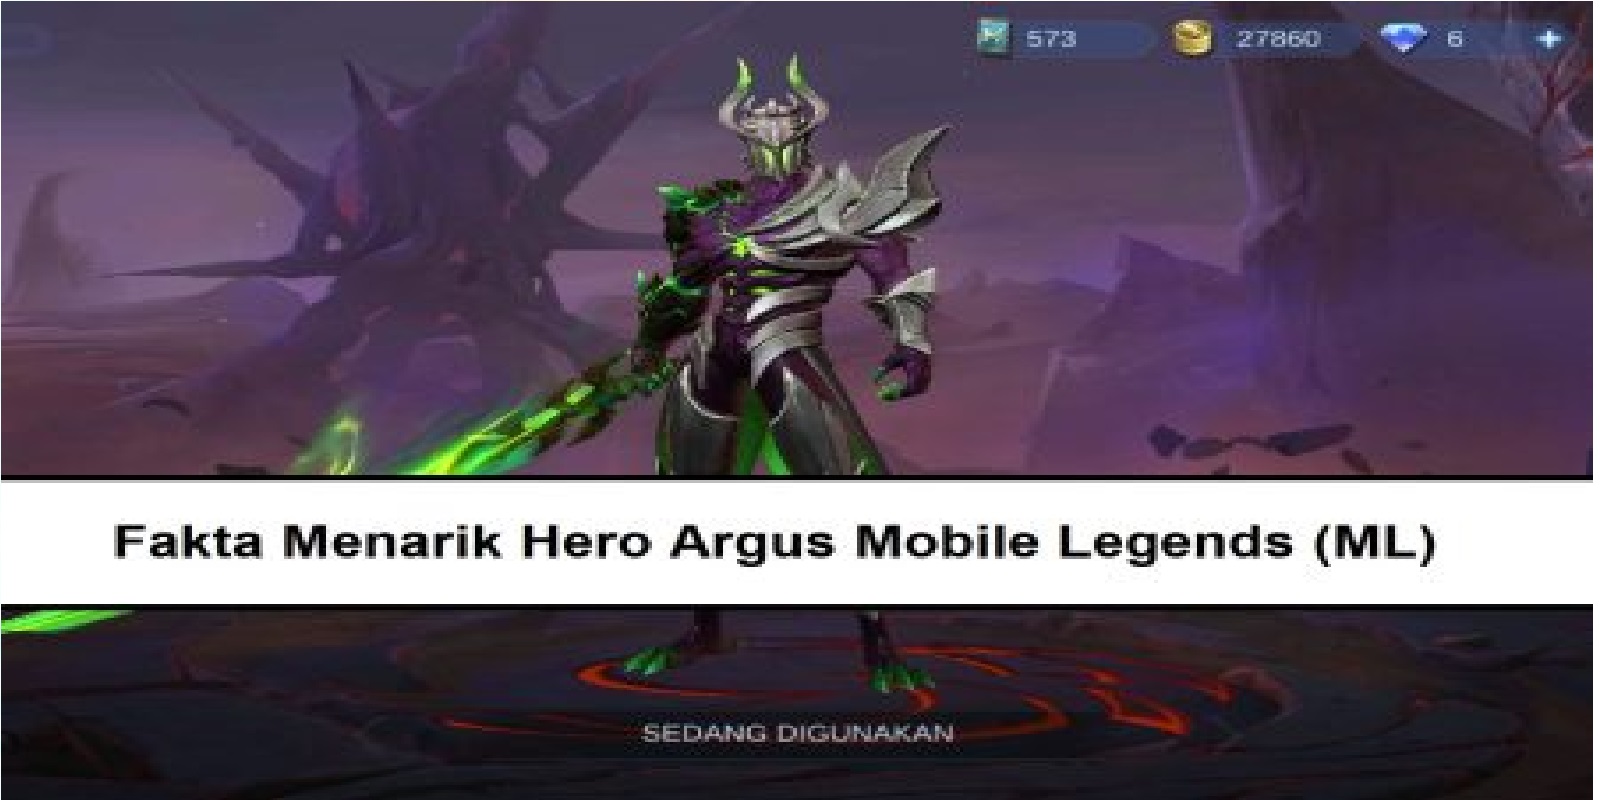 Argus mobile legends